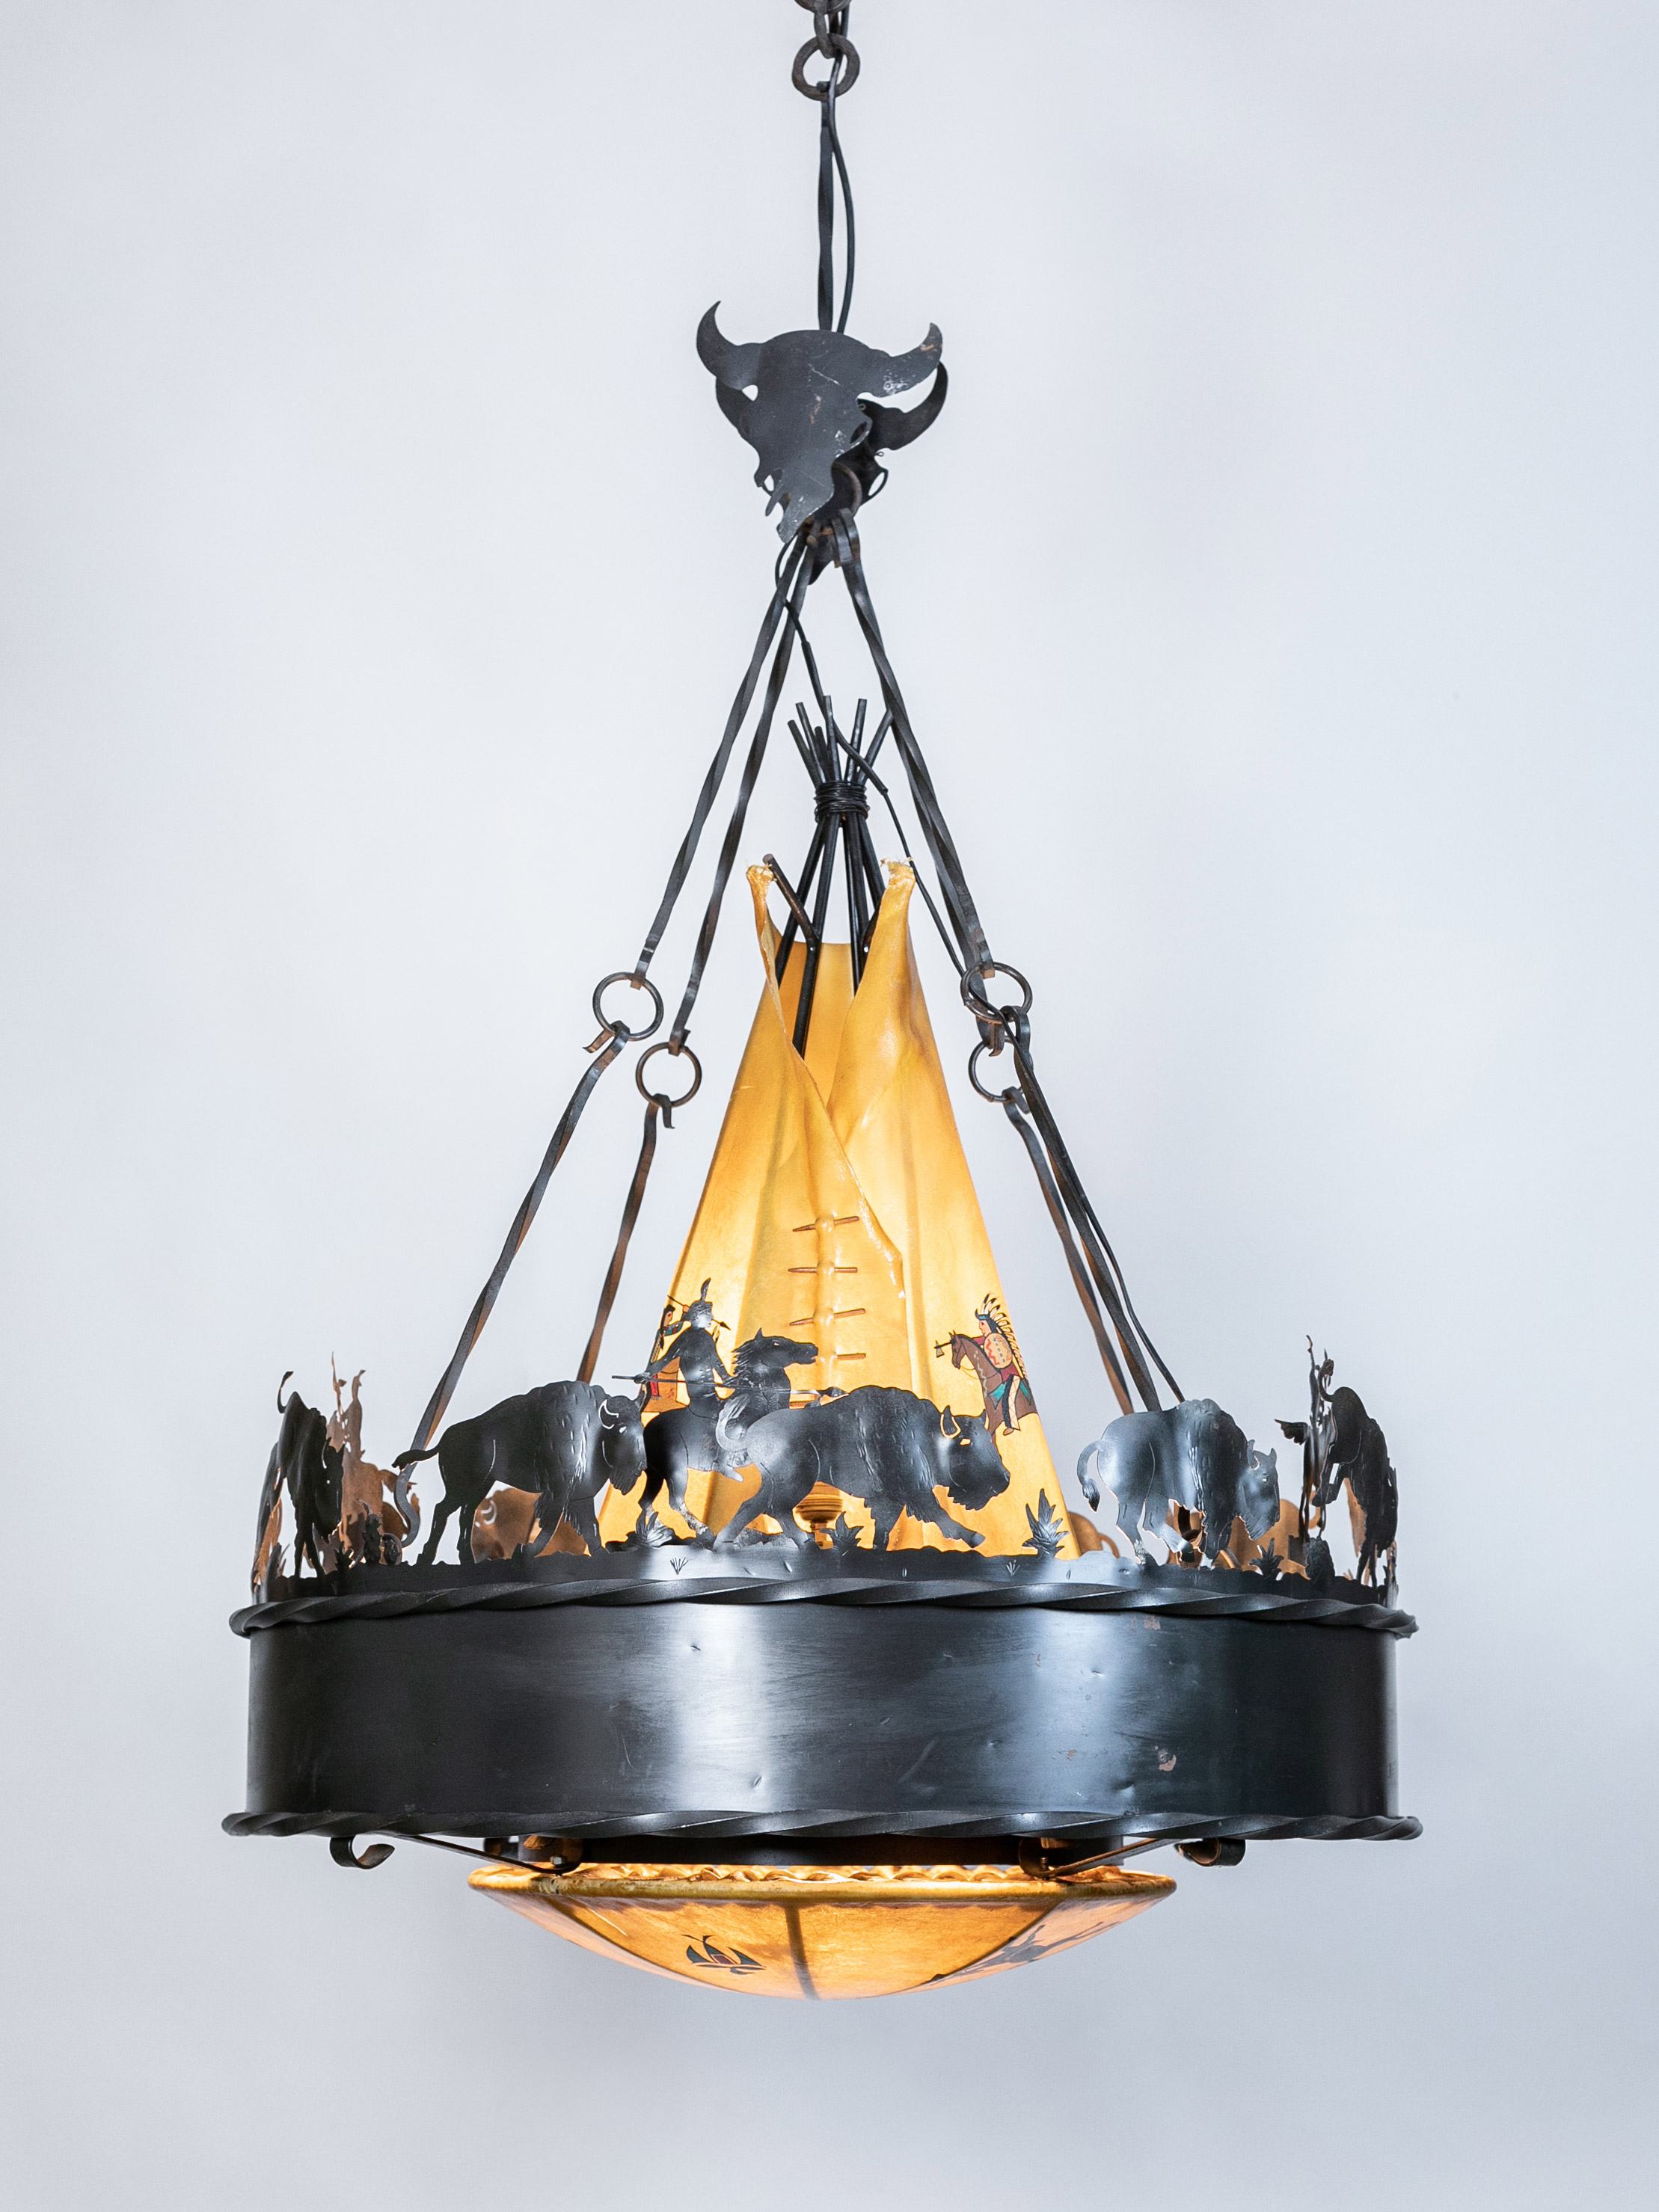 Very Rare chandelier from Thomas Molesworth